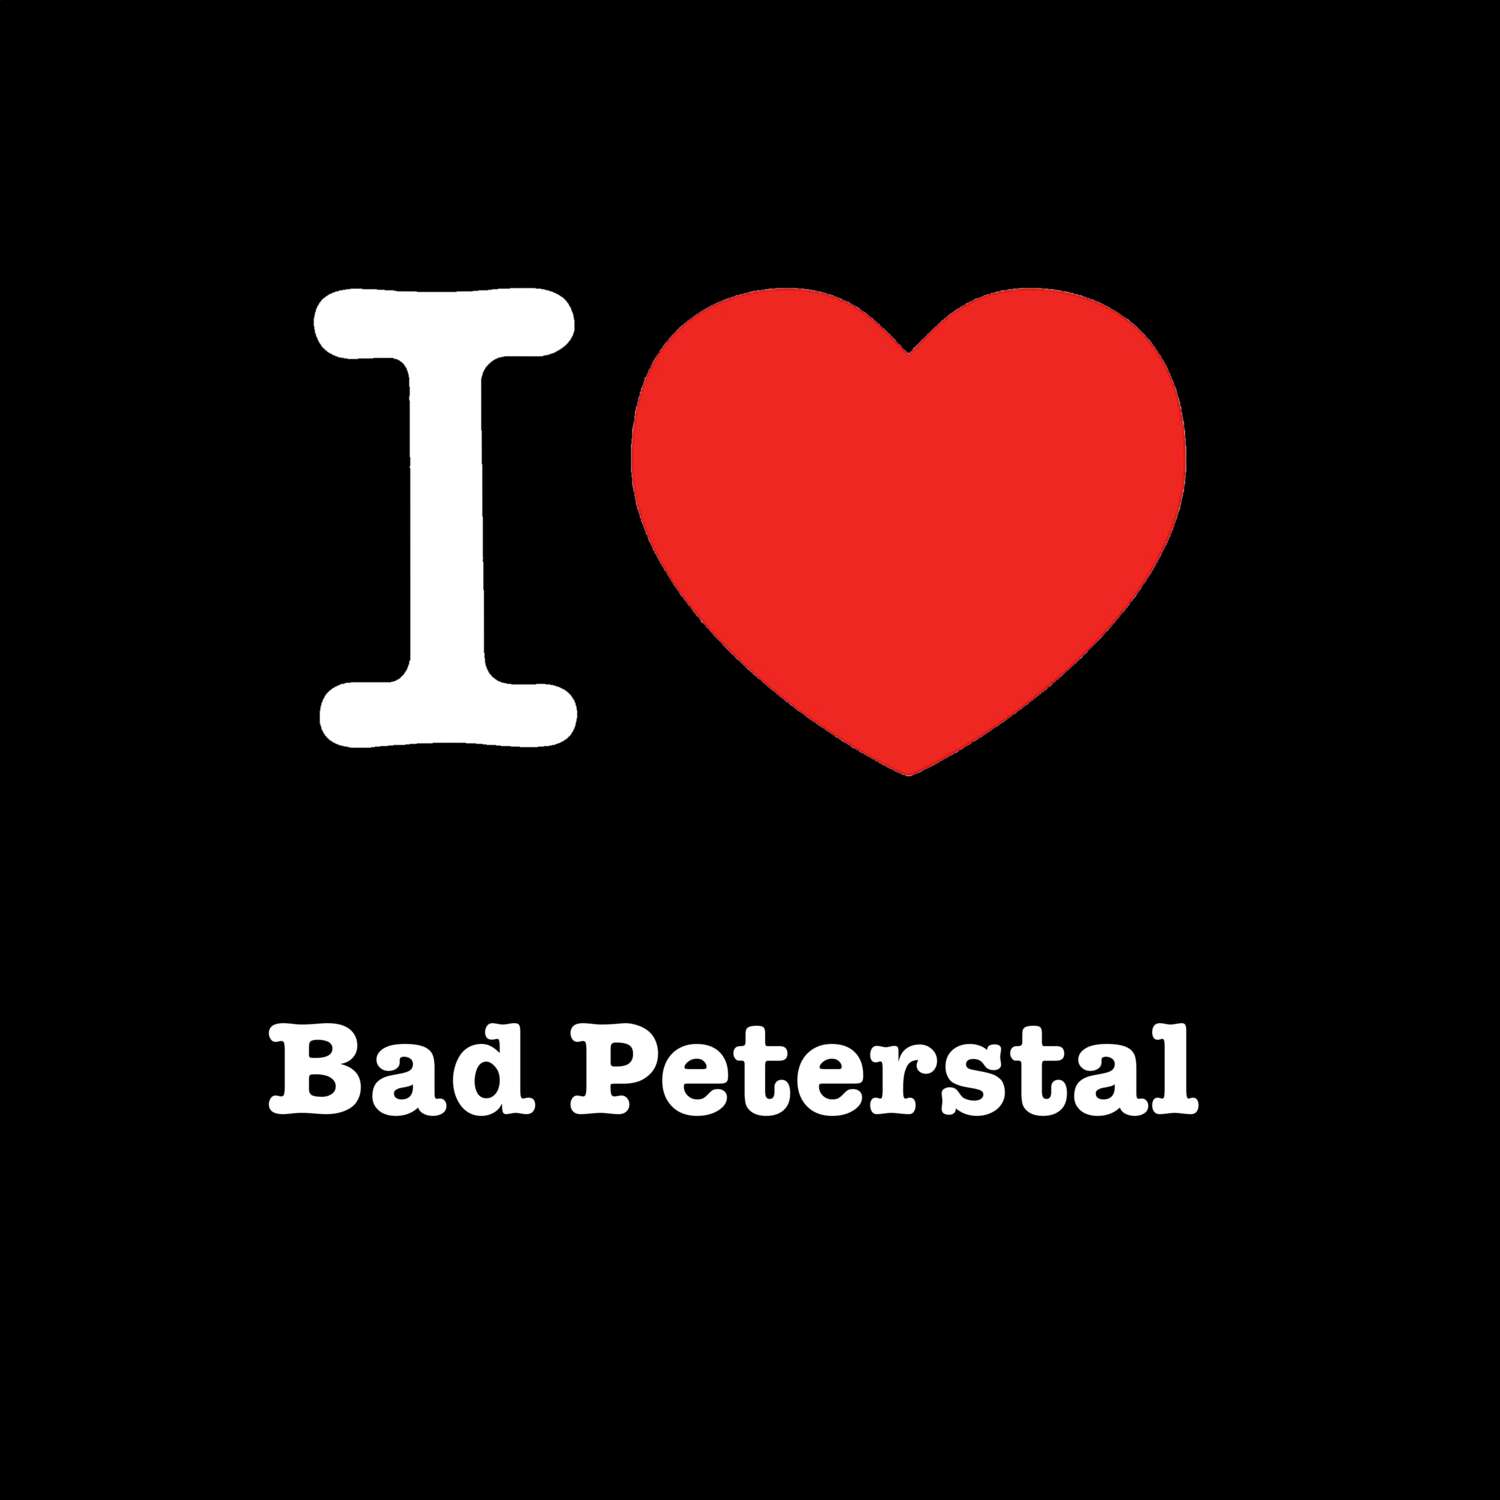 Bad Peterstal T-Shirt »I love«